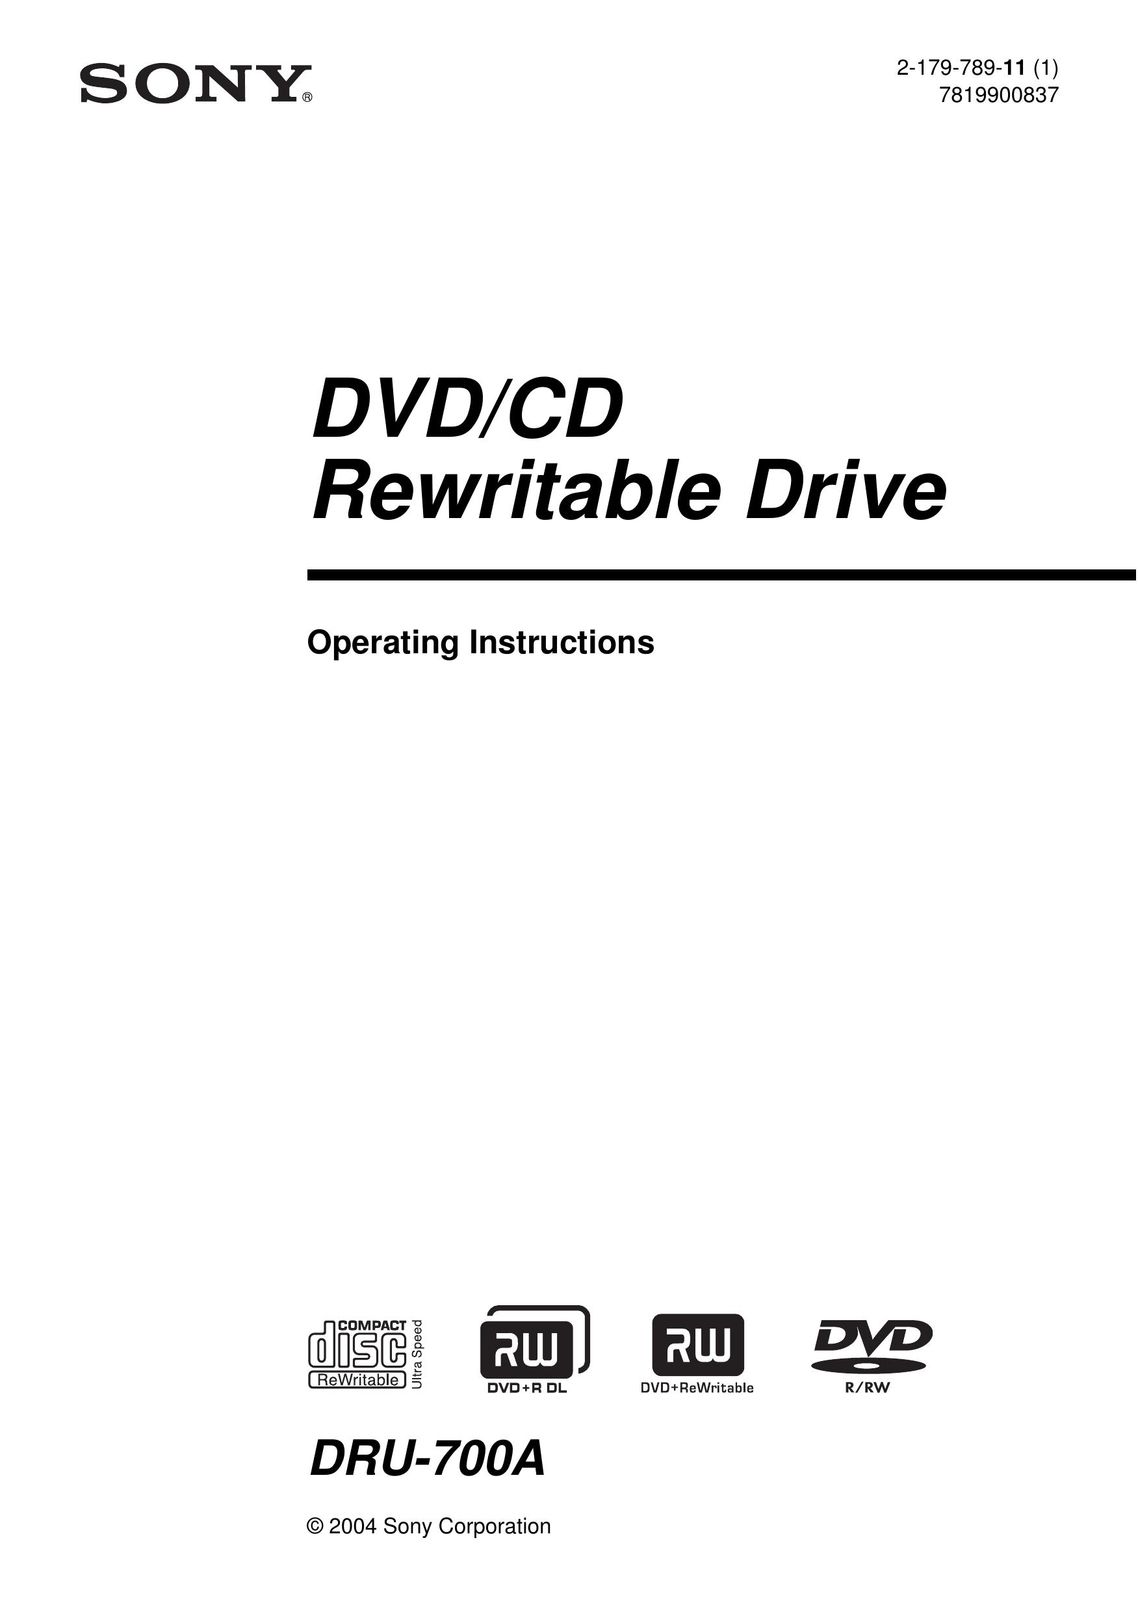 Sony DRU-700A DVD Recorder User Manual